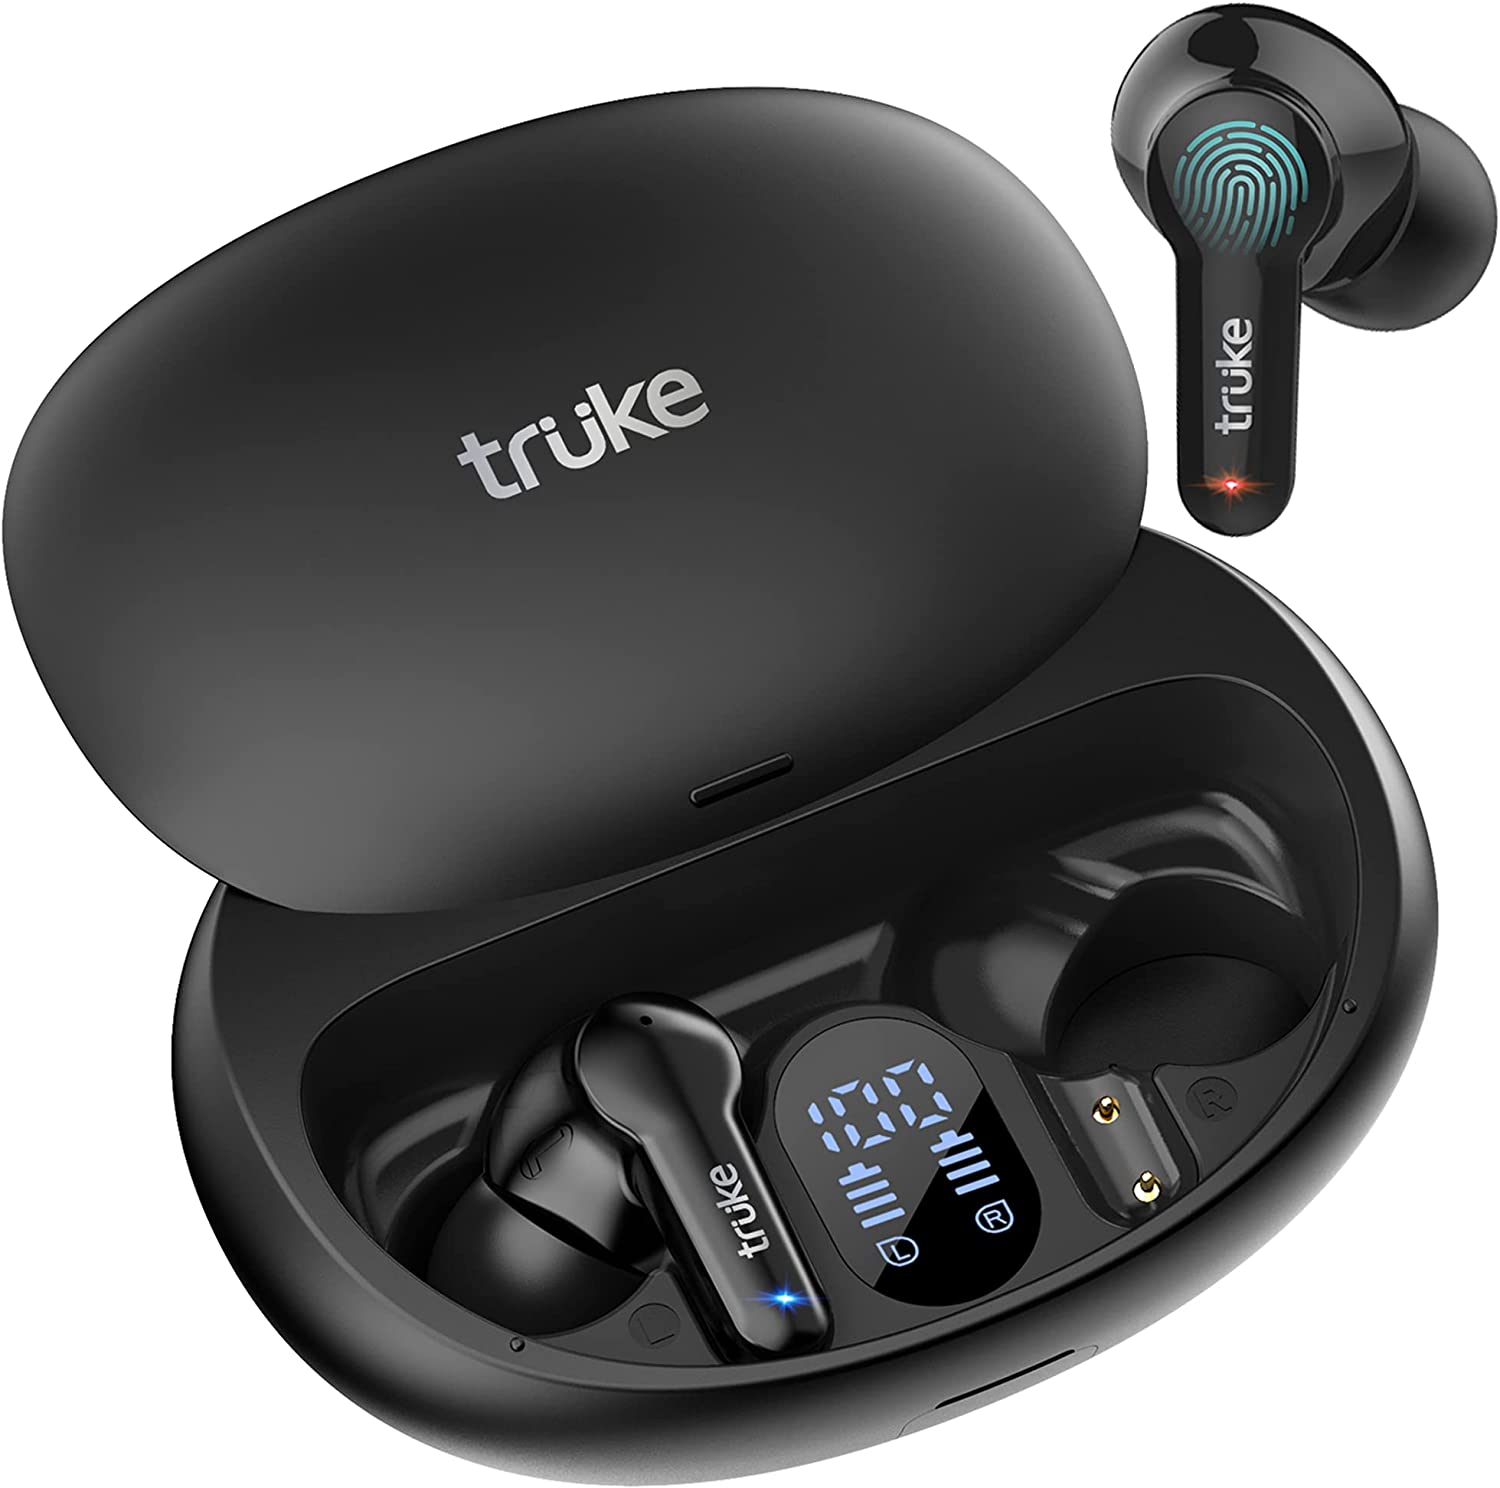 truke Buds S1 True Wireless Earbuds, 10mm Driver - Review, Specs